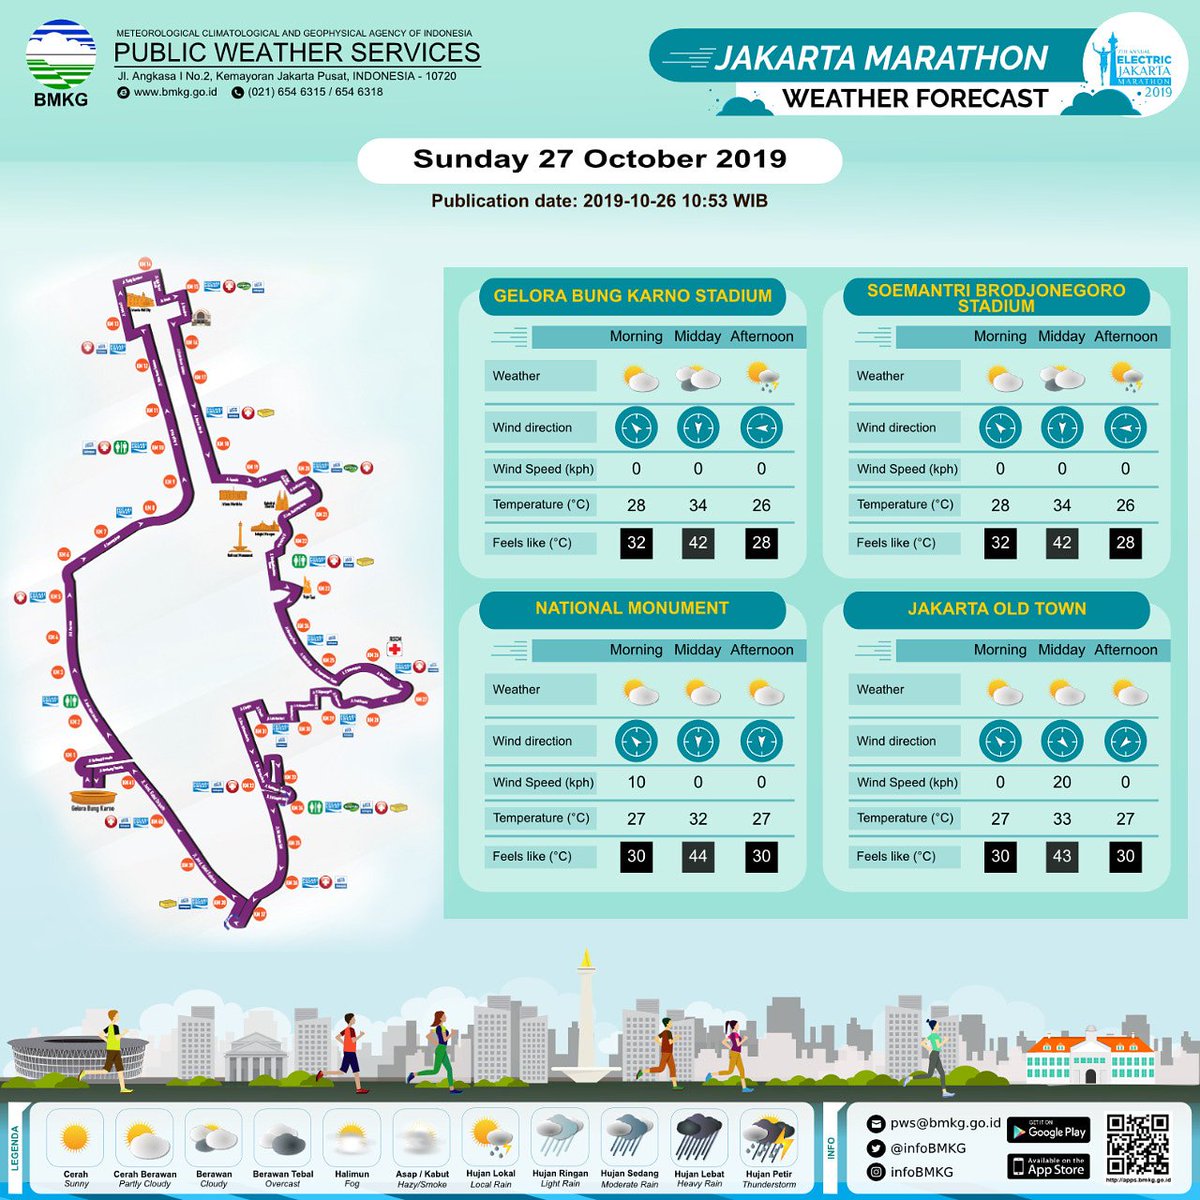 Halo Sobat BMKG,

Dalam rangka 7th Annual Electric Jakarta Marathon 2019 yang akan diselenggarakan Minggu 27 Oktober 2019, berikut kami sampaikan update prakiraan cuaca saat event tersebut.

#infoBMKG #PrakiraanCuaca #MariKenaliCuaca
#jakartamarathon
#jakmar2019
-pws